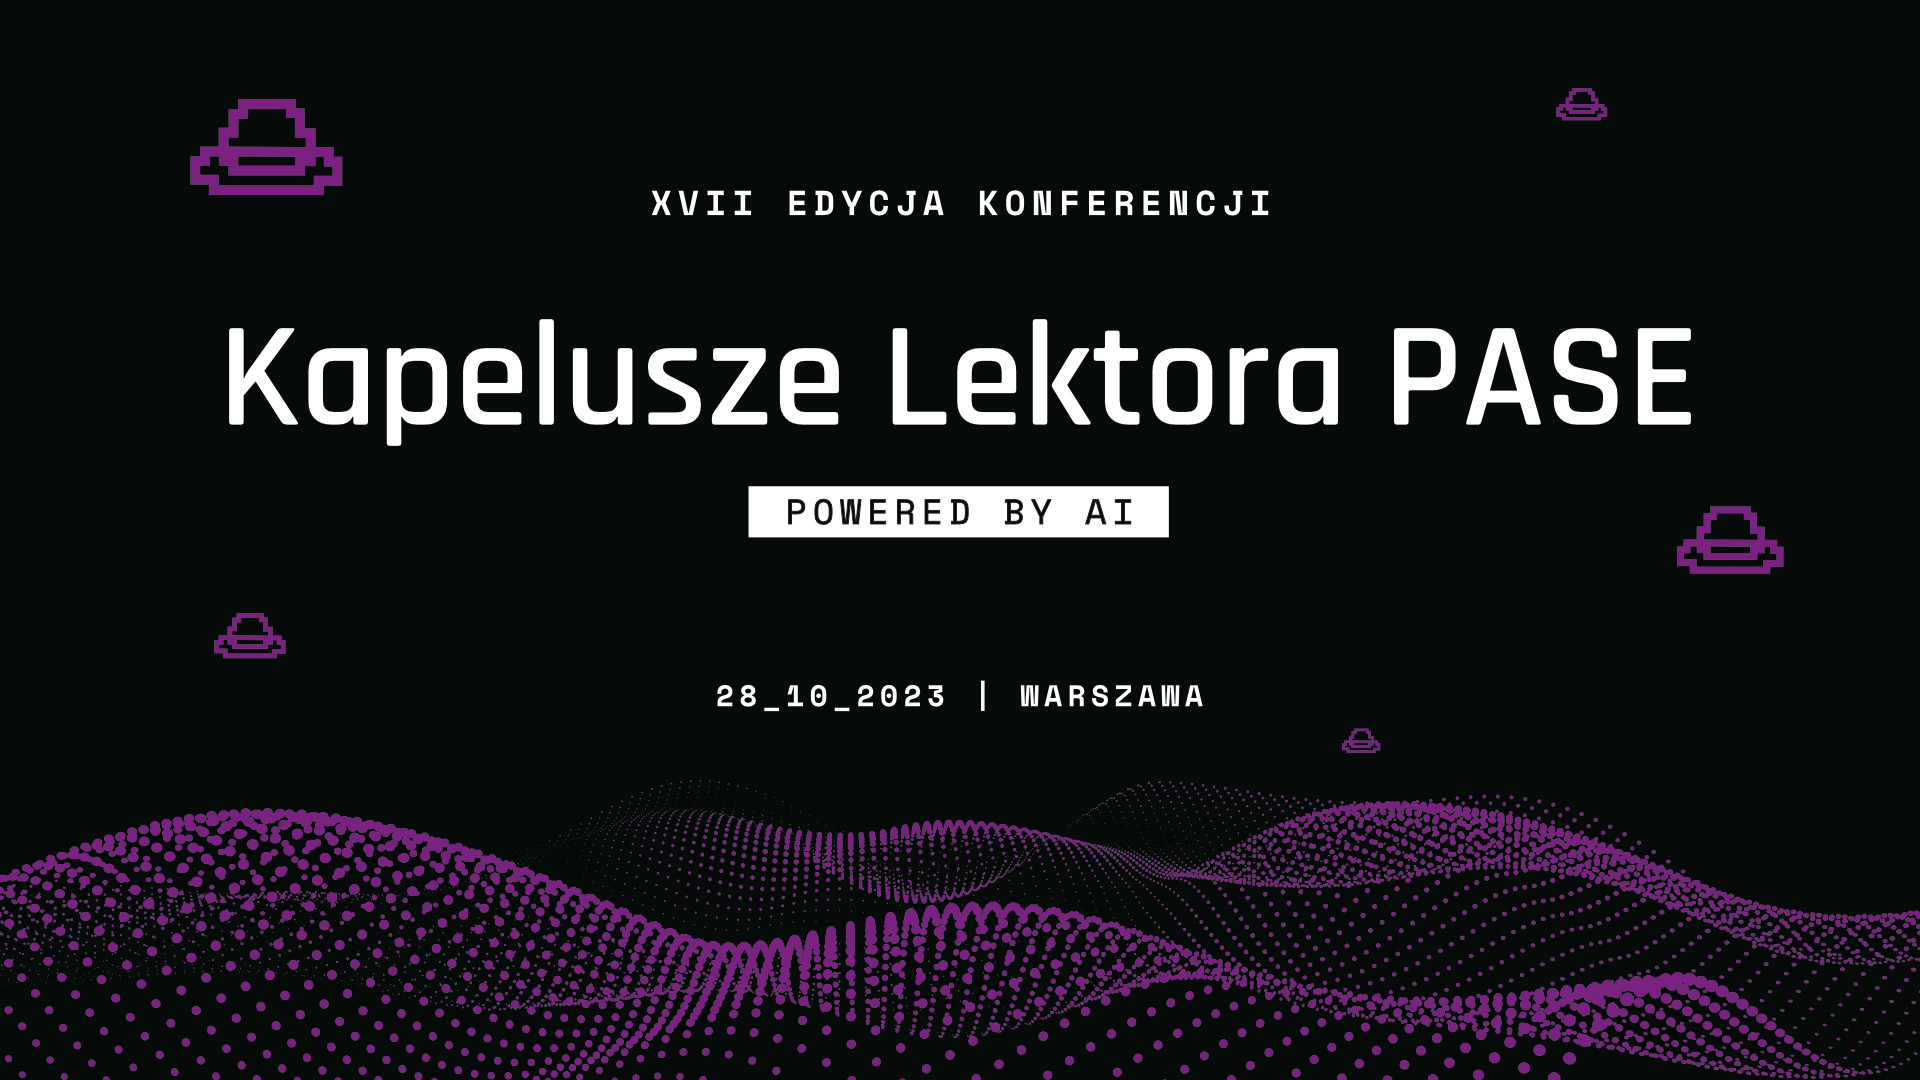 Kapelusze Lektora PASE 2023 Powered by AI